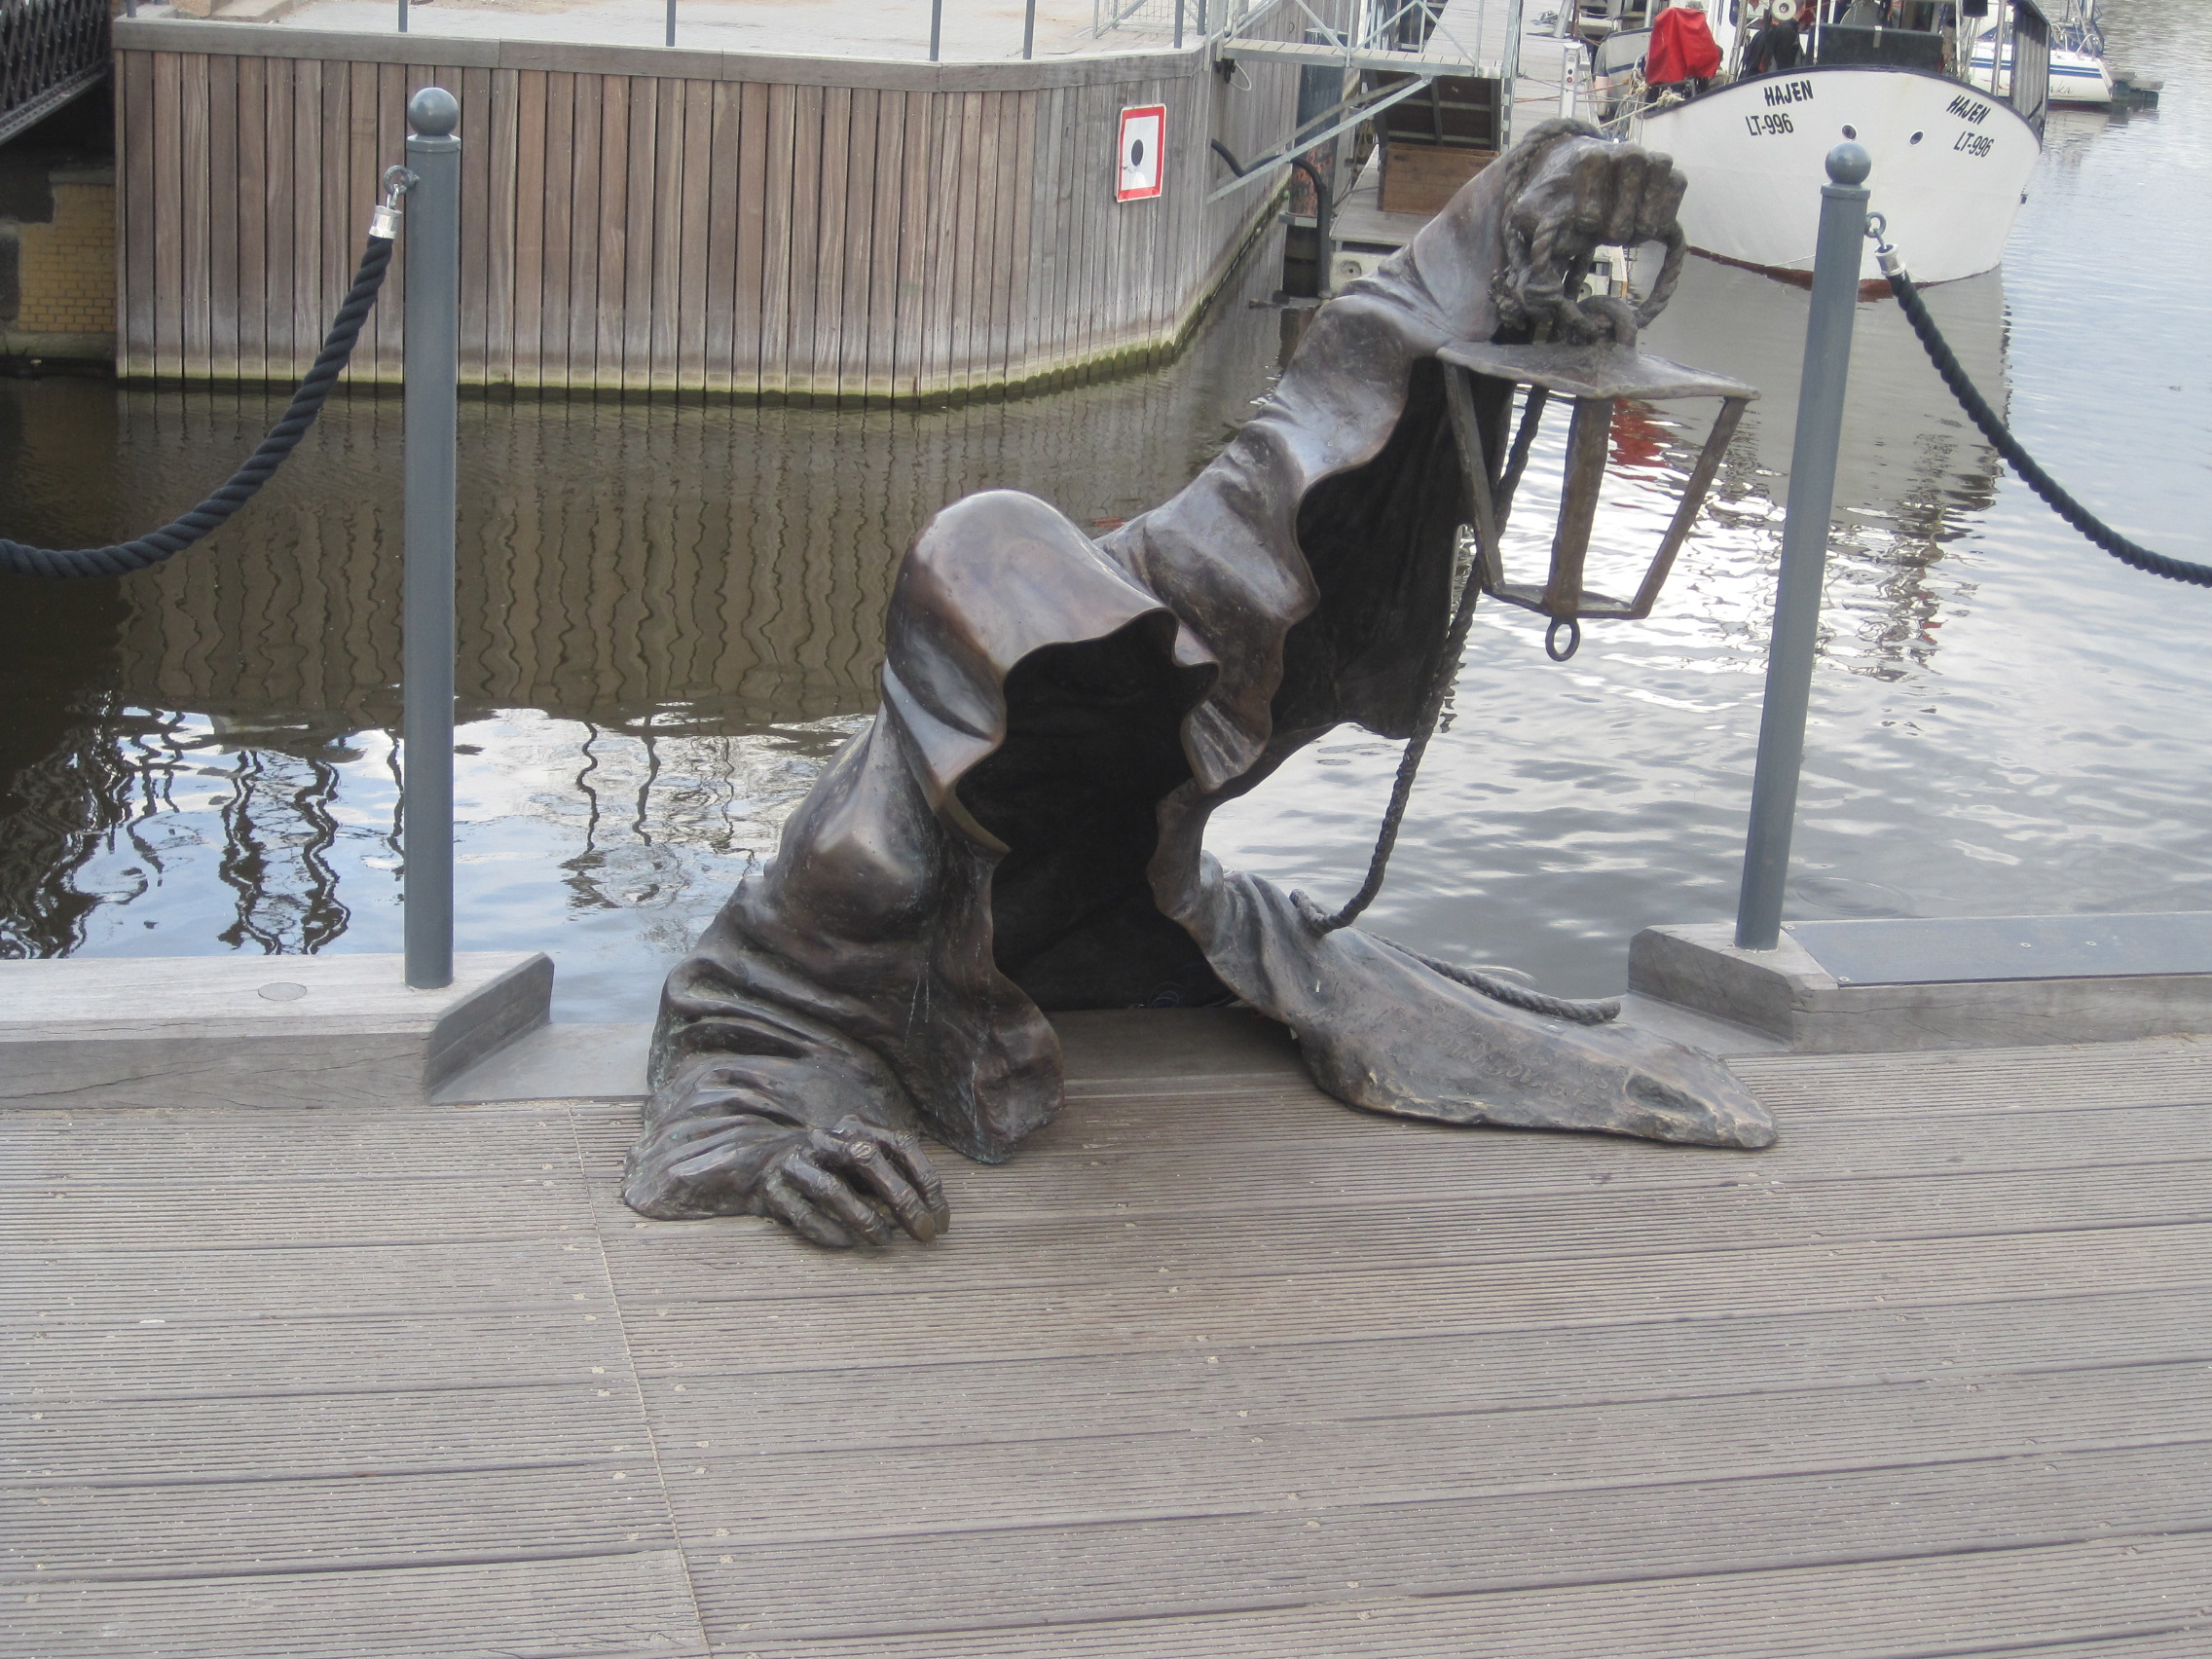 Klaipeda dementor statue